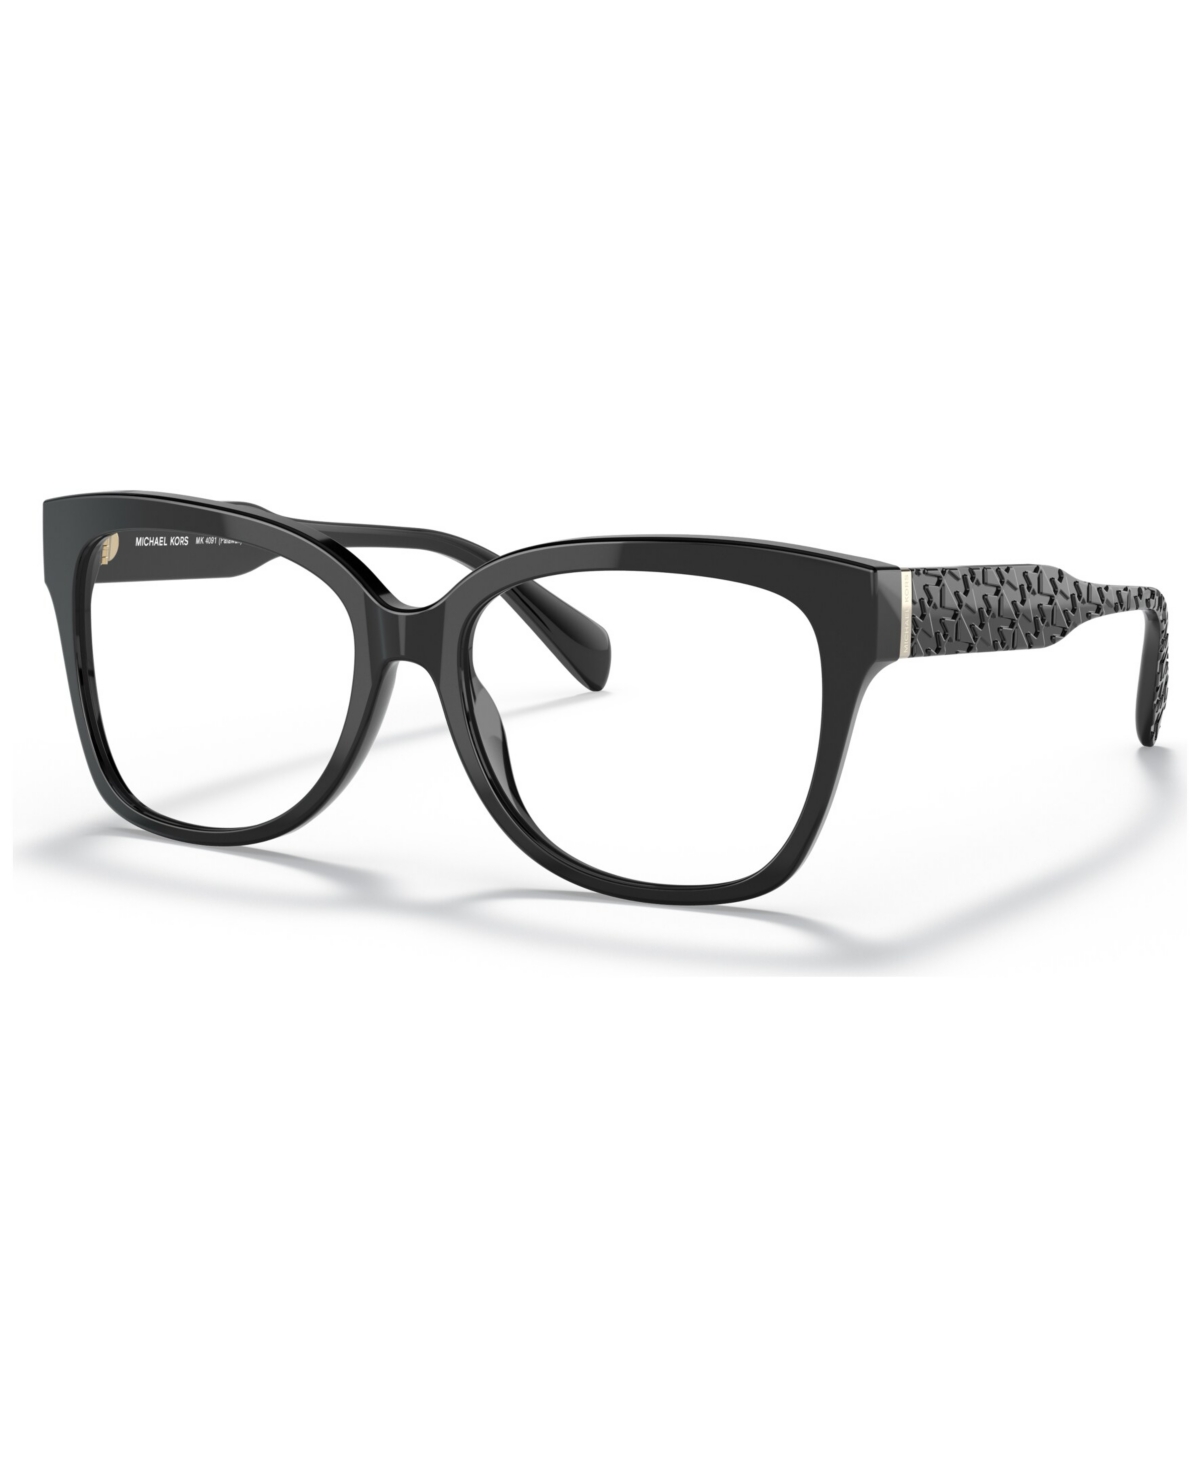 Women's Square Eyeglasses, MK409154-o - Black